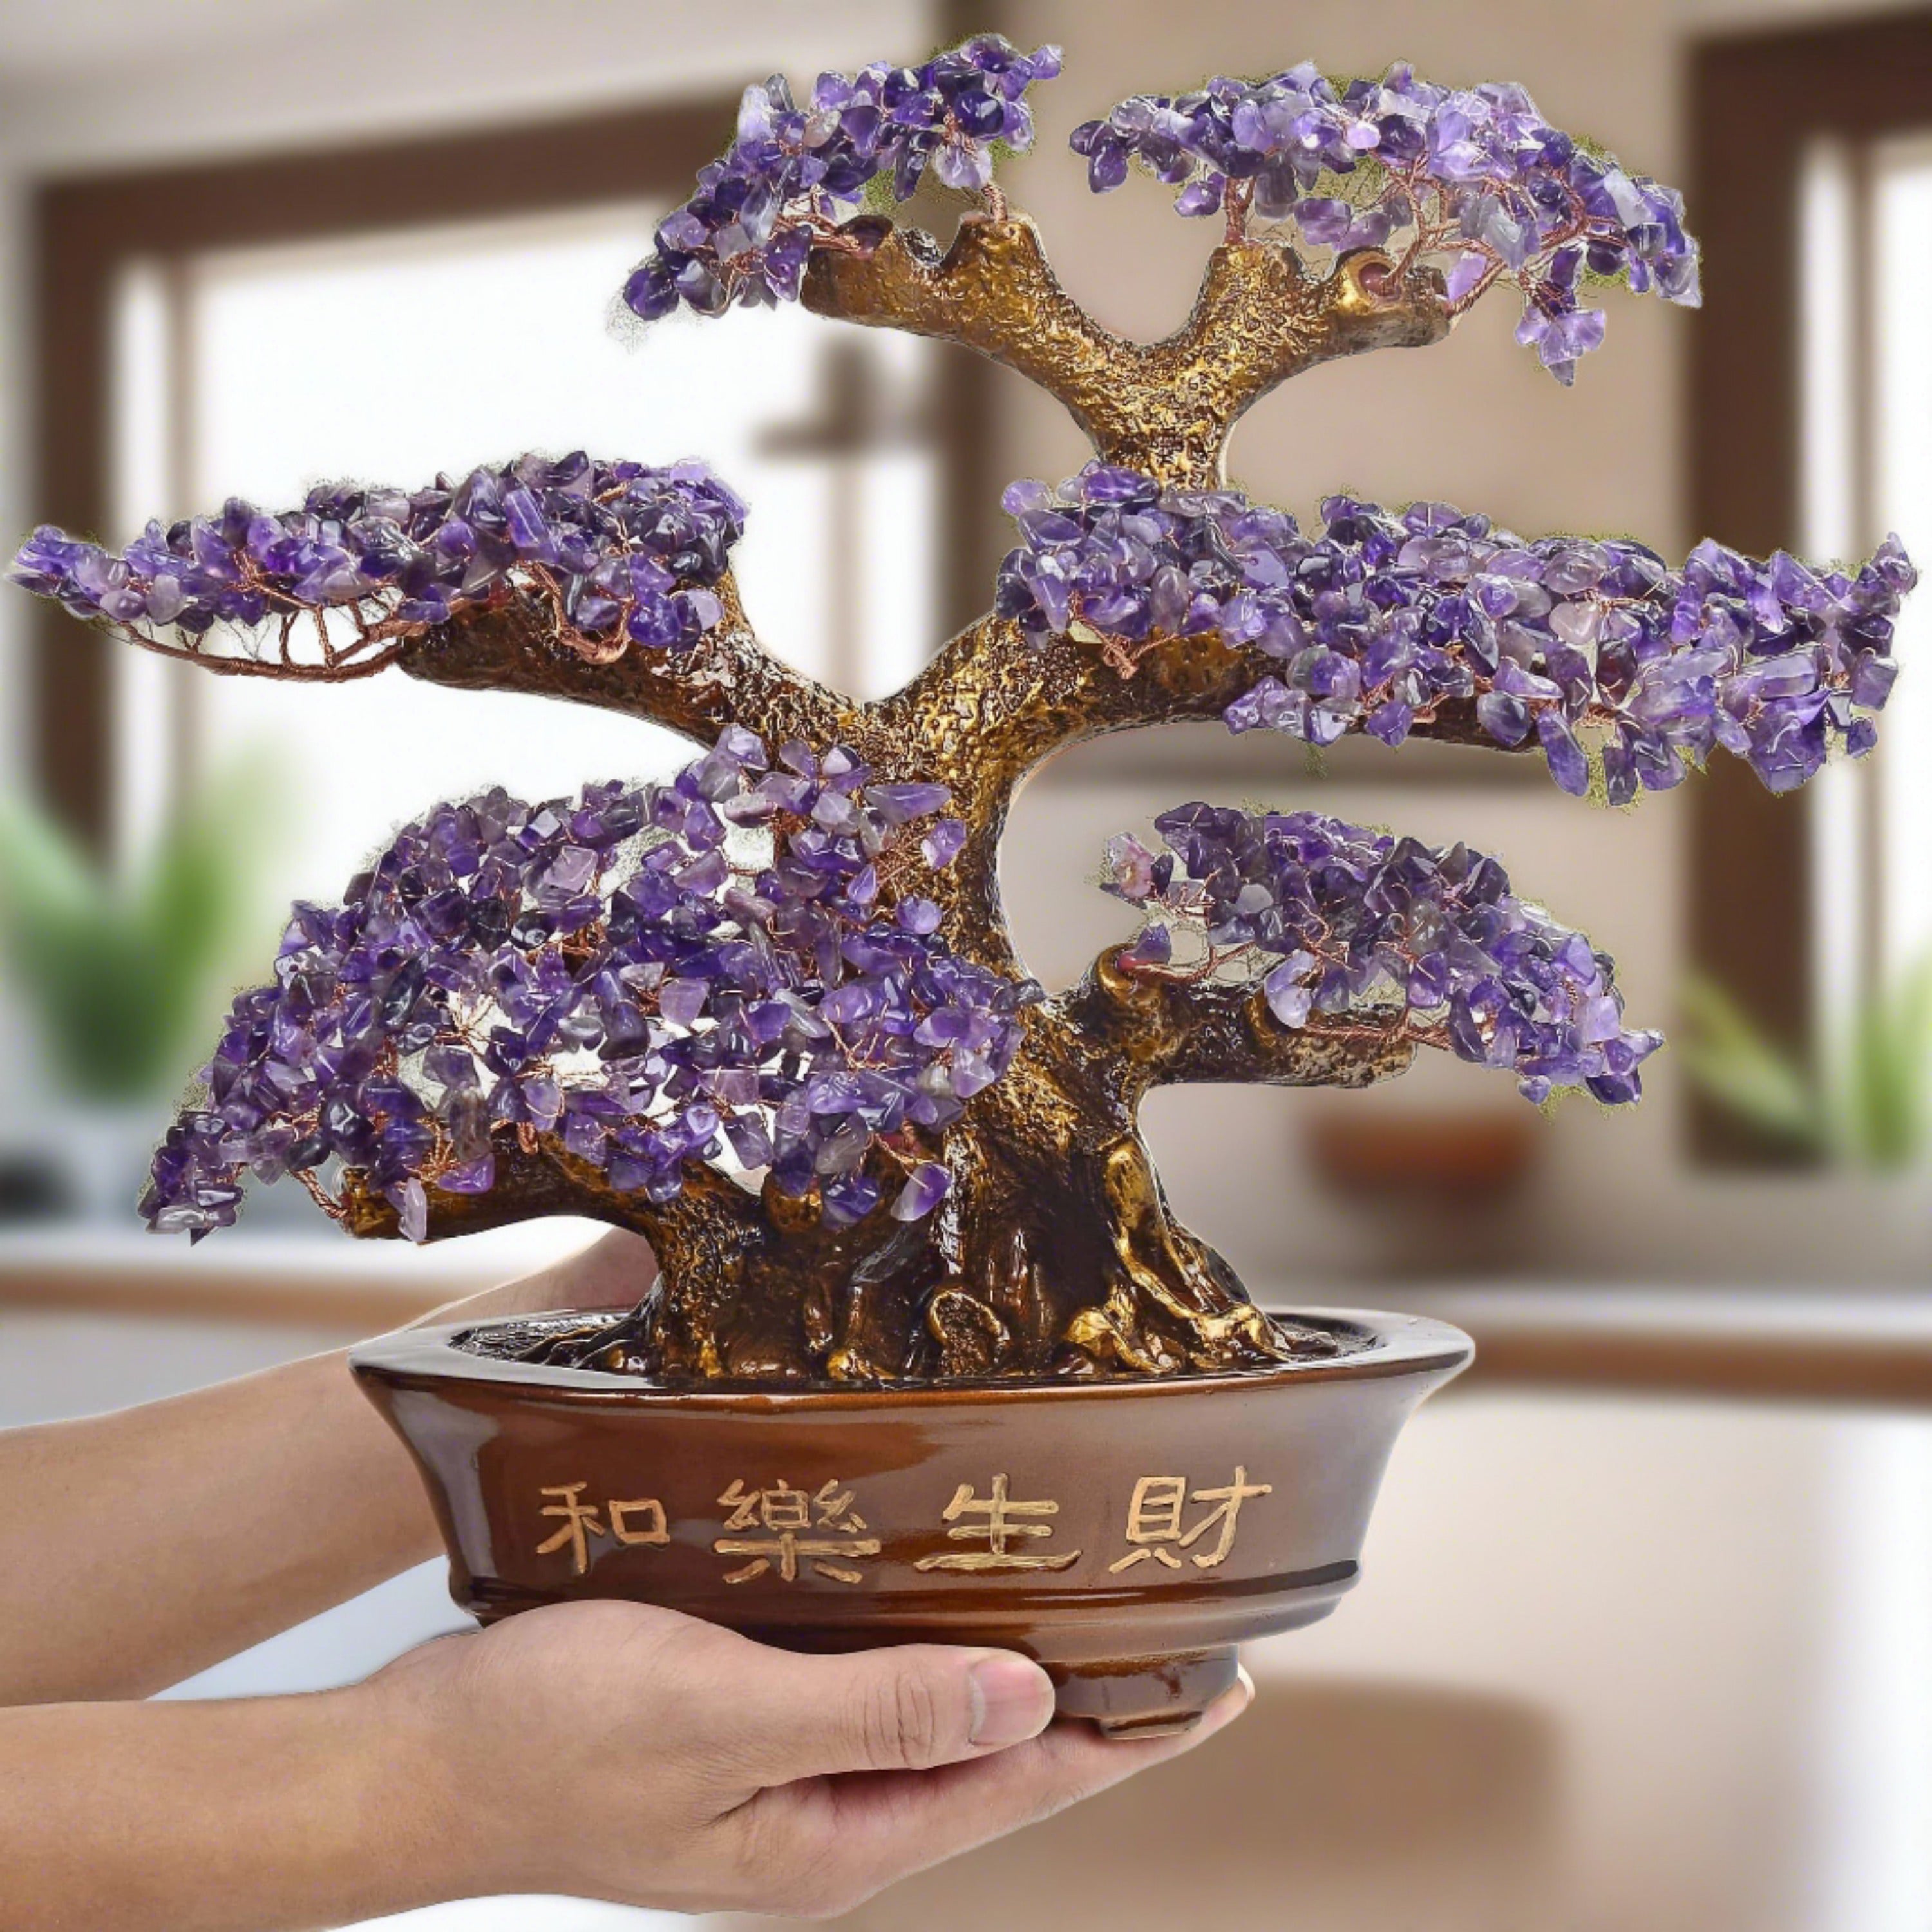 Kalifano Gemstone Trees Amethyst Bonsai Tree of Life with 1,251 Natural Gemstones K9151-AM